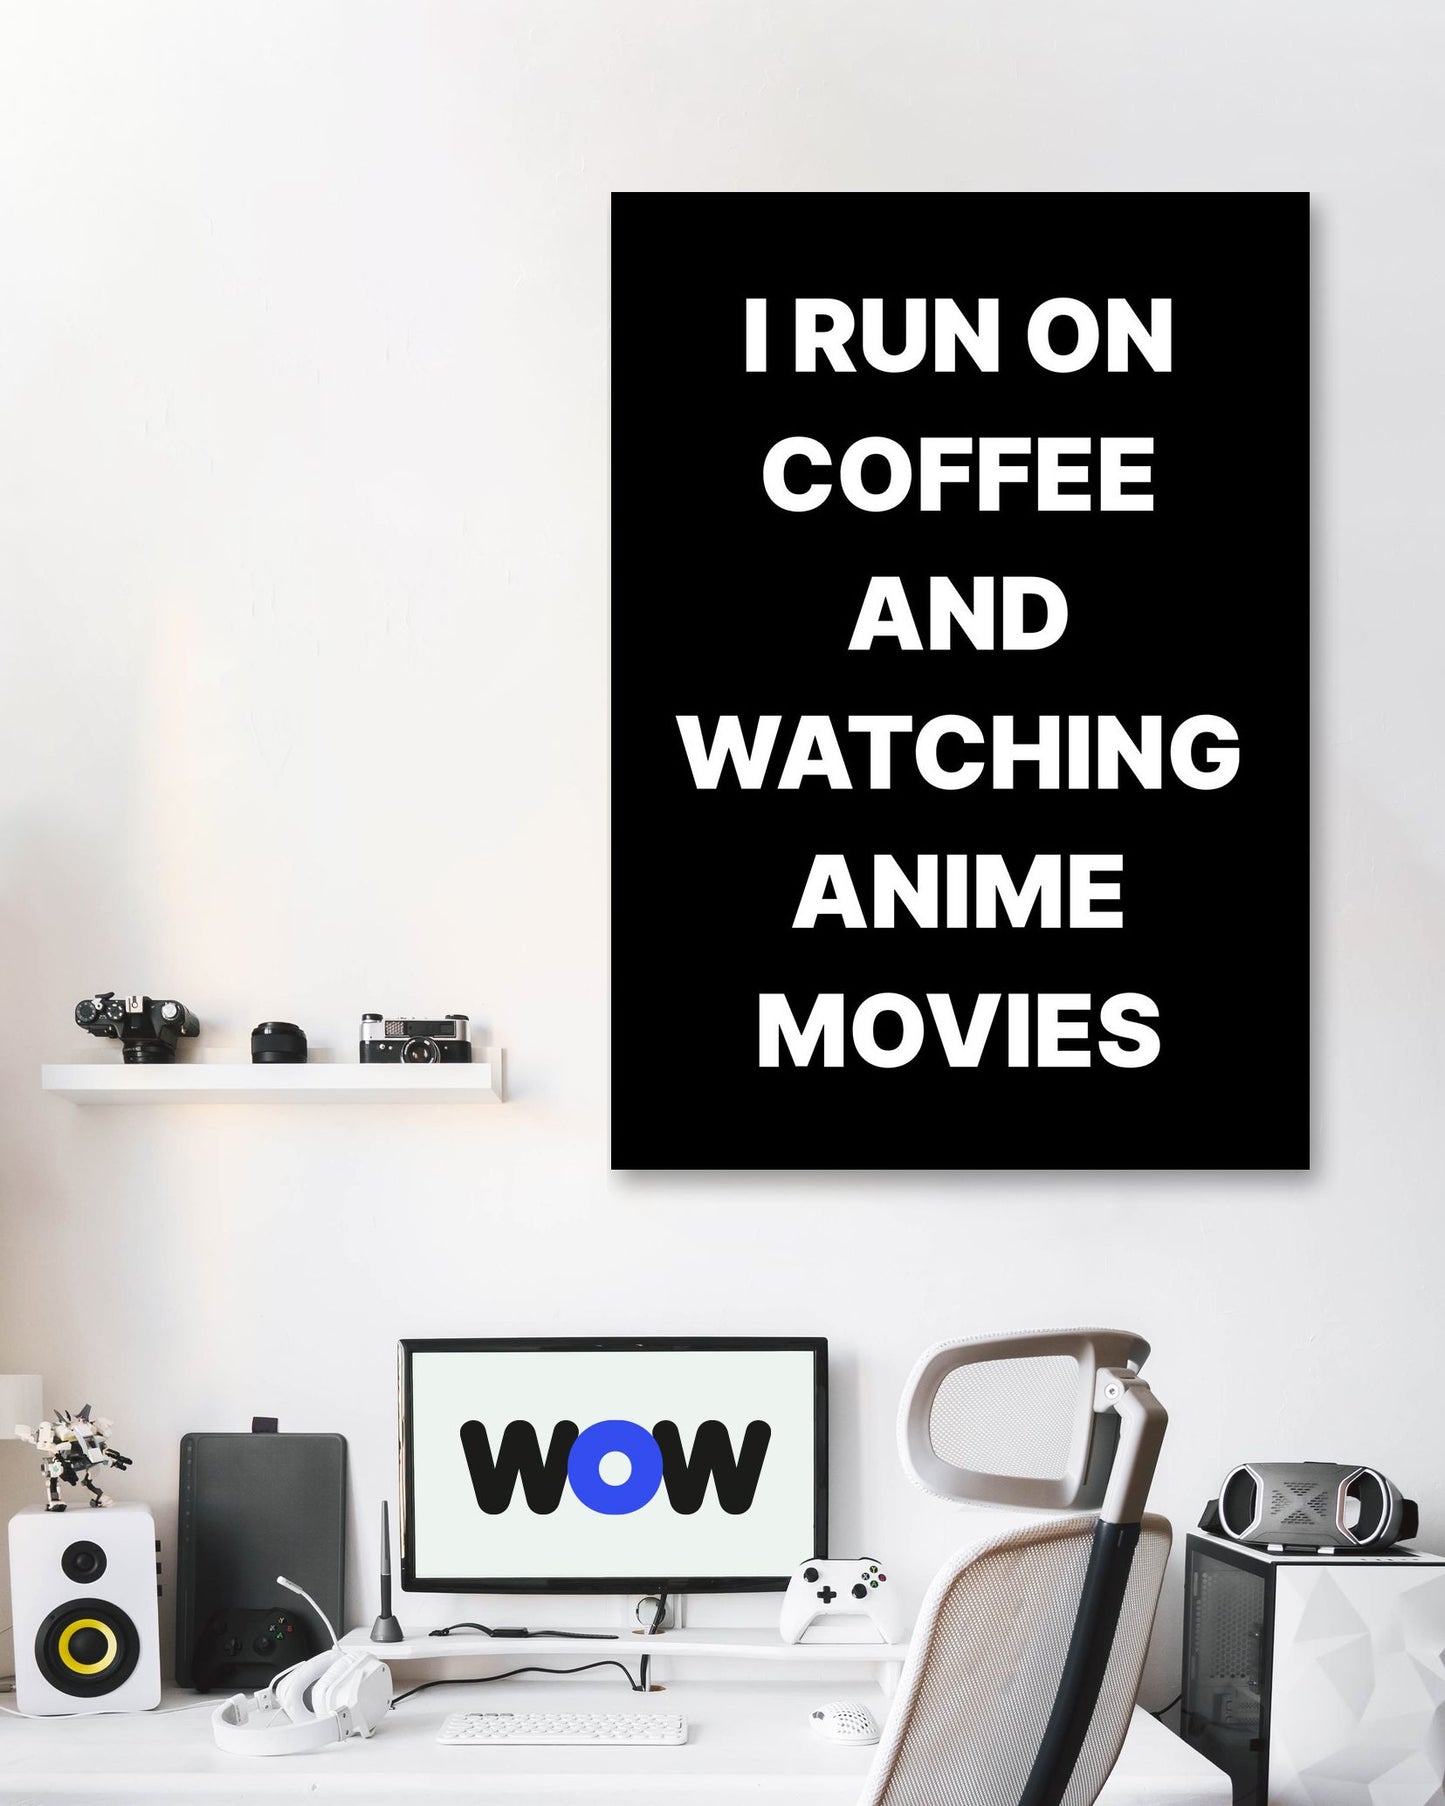 I run on coffee and watching anime movies - @VickyHanggara